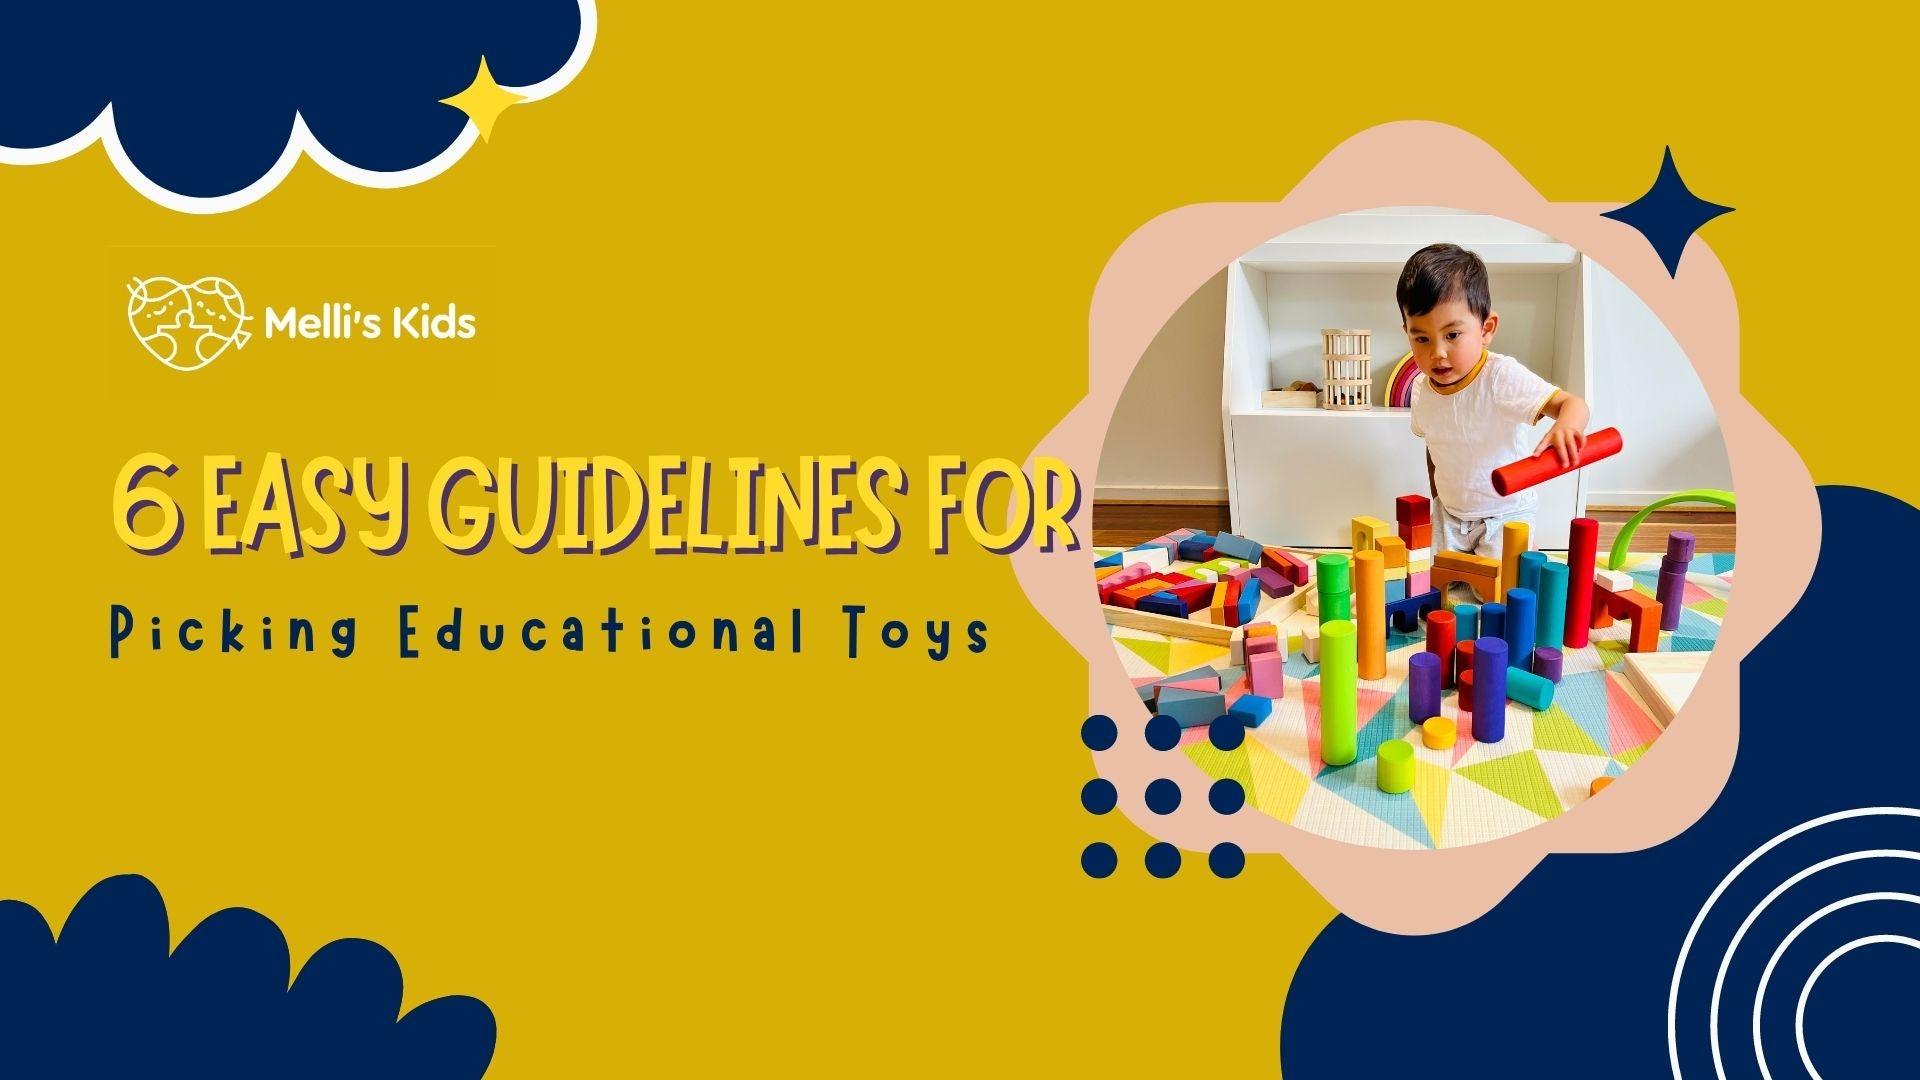 6 Easy Guidelines for Picking Educational Toys - Melli's Kids